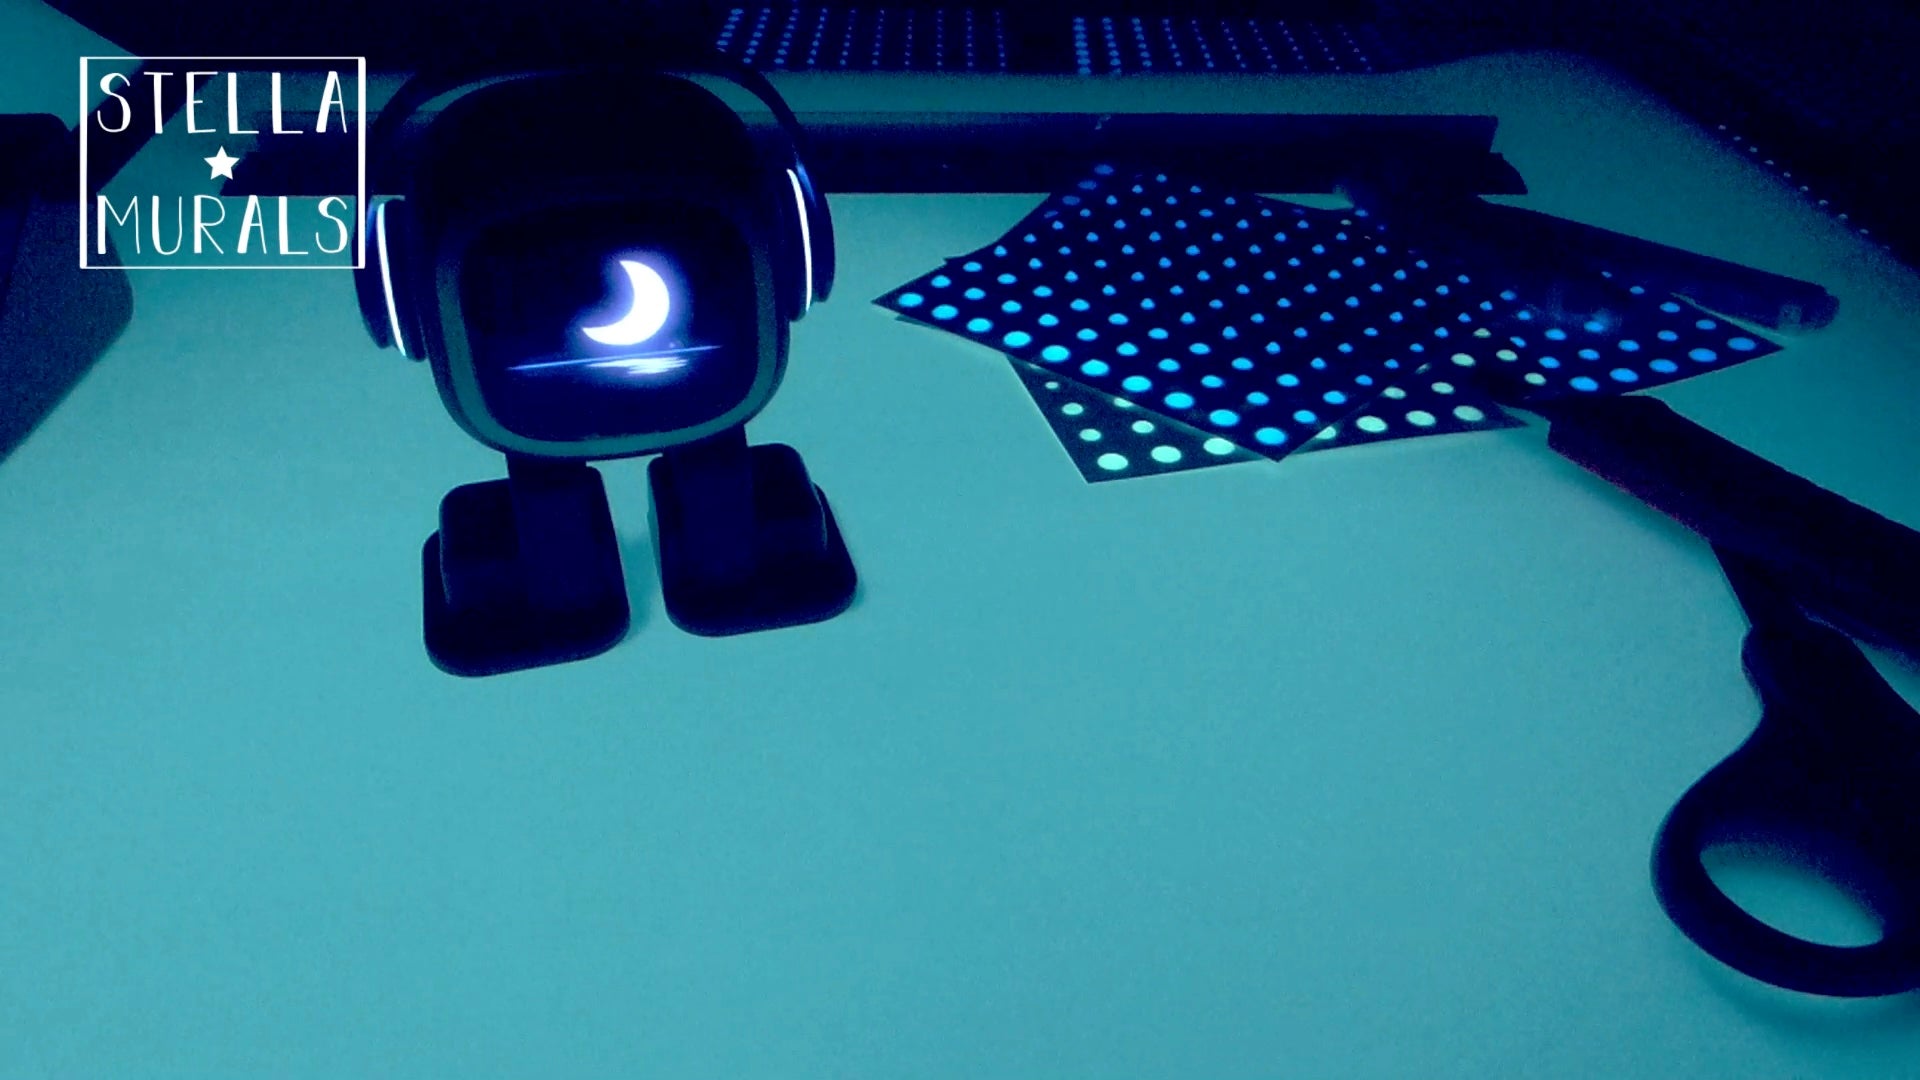 Emo the desktop robot and glow stars, saying goodnight